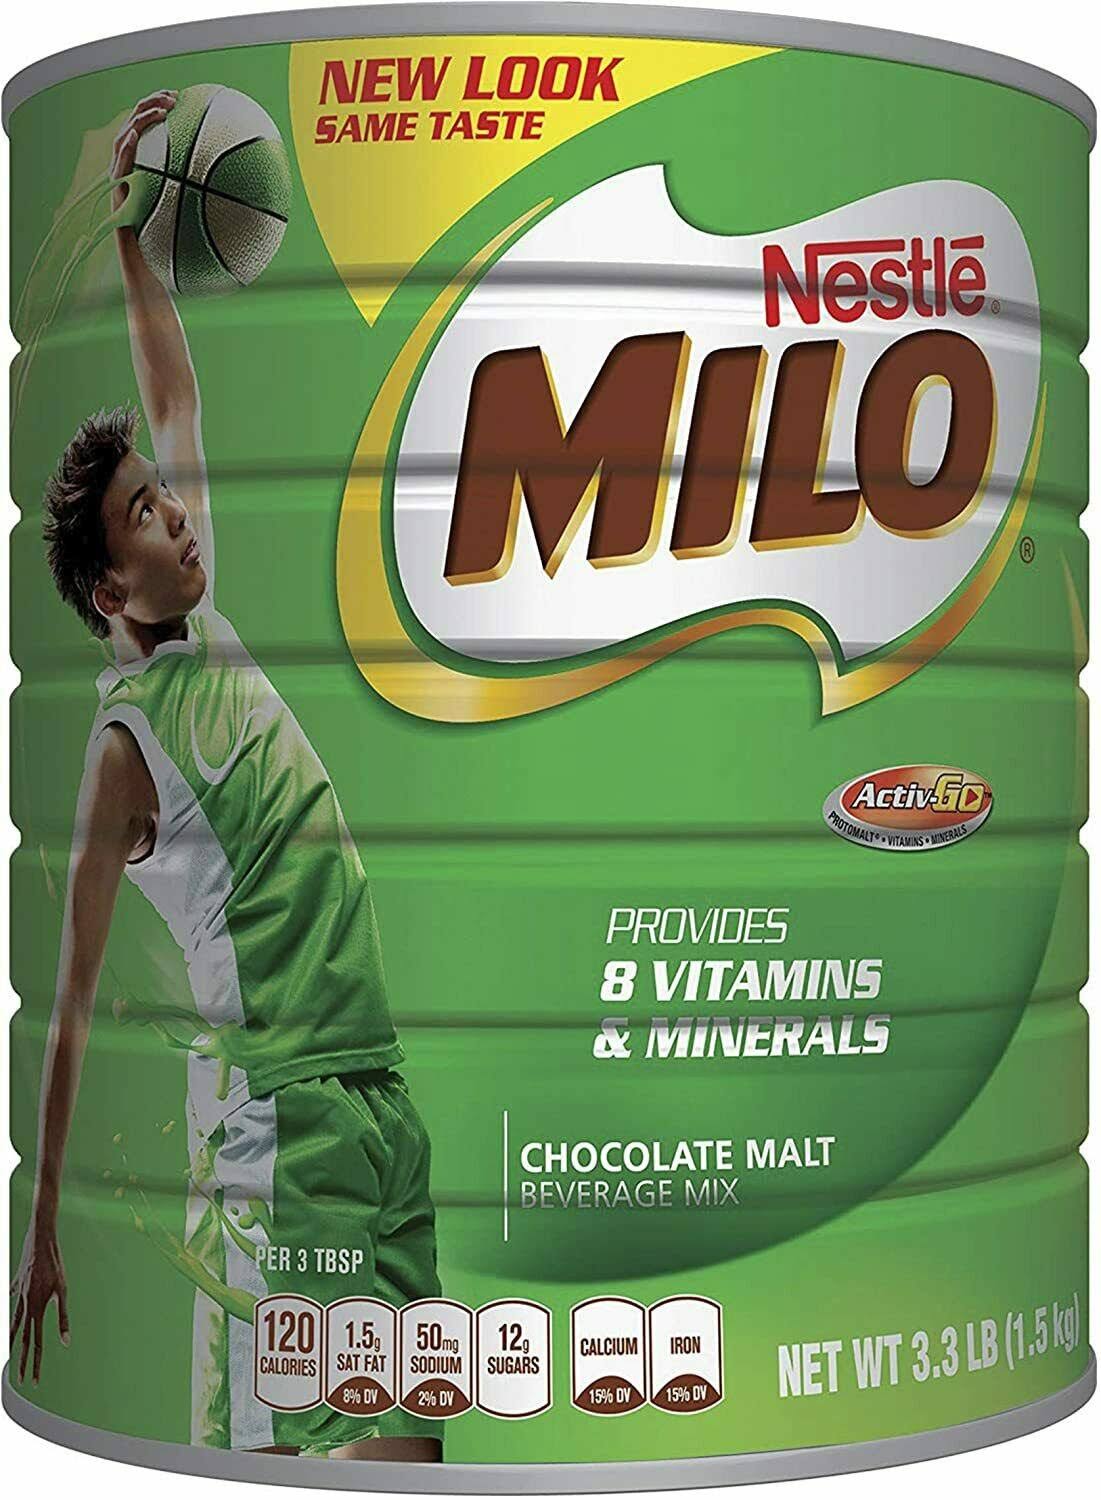 Nestle Milo Chocolate Beverage Mix - Jumbo, 3.3lbs